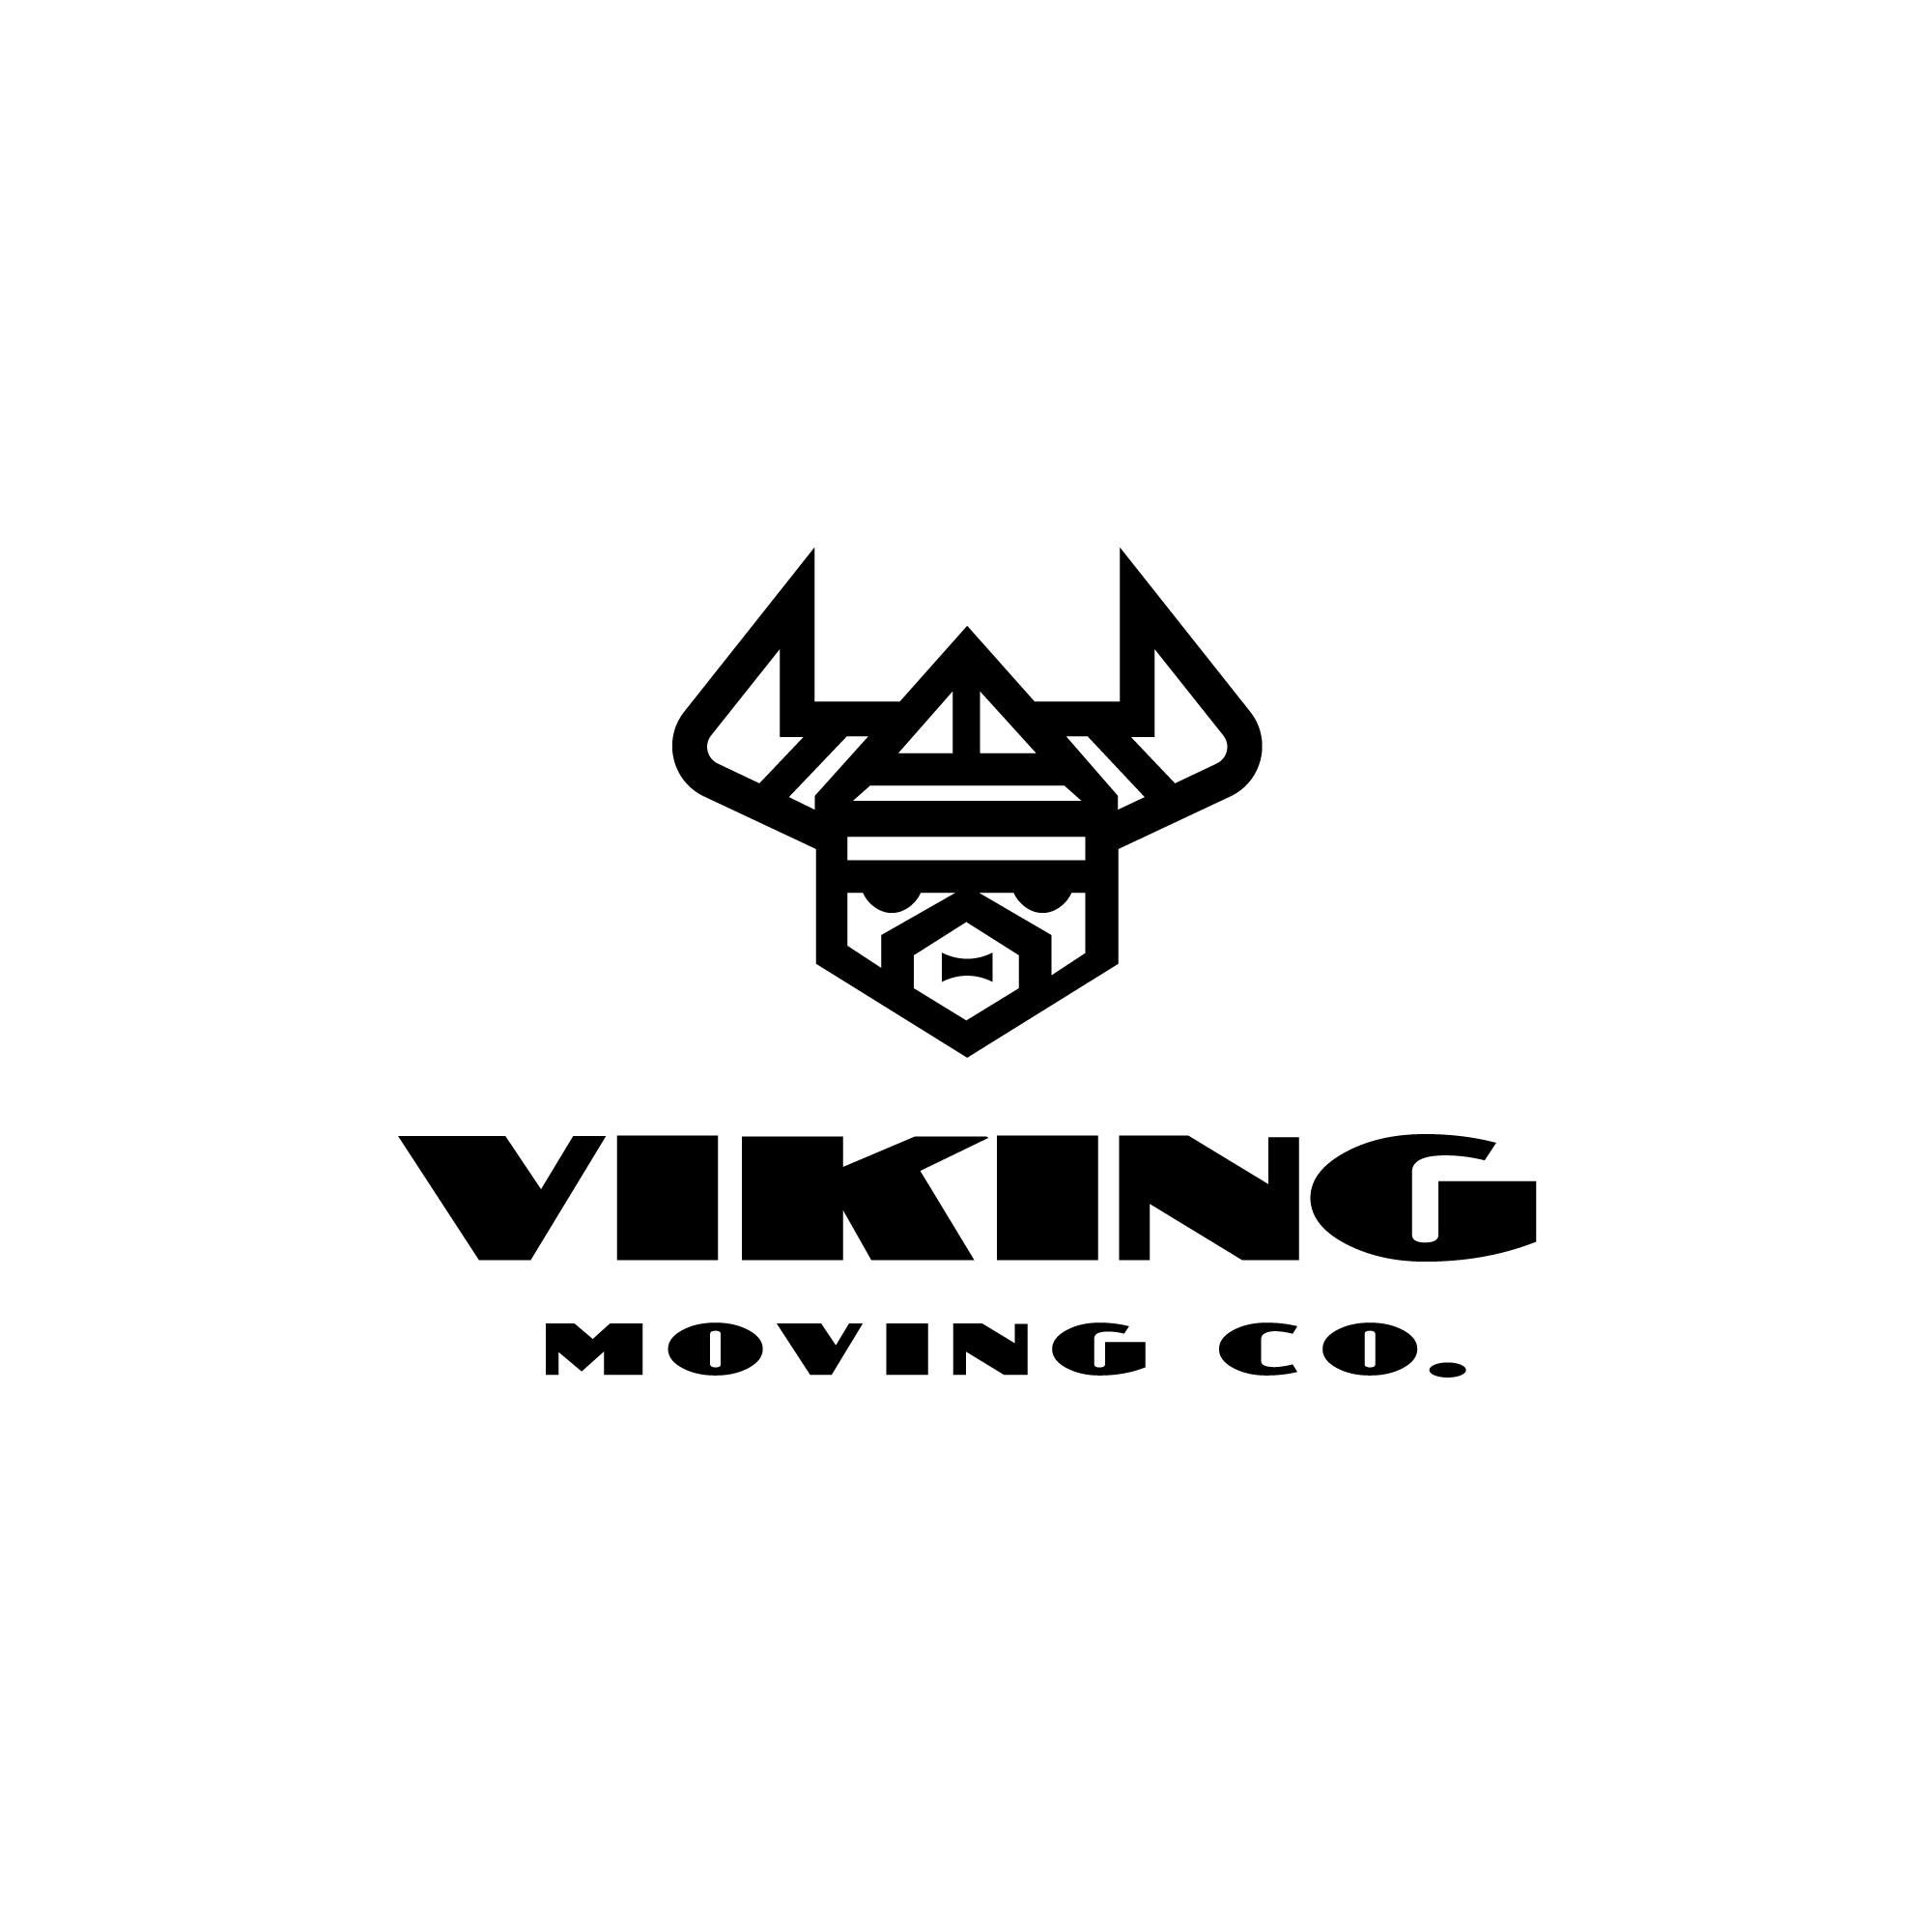 Moving Logo - For Sale - Viking Moving Co. Logo Design